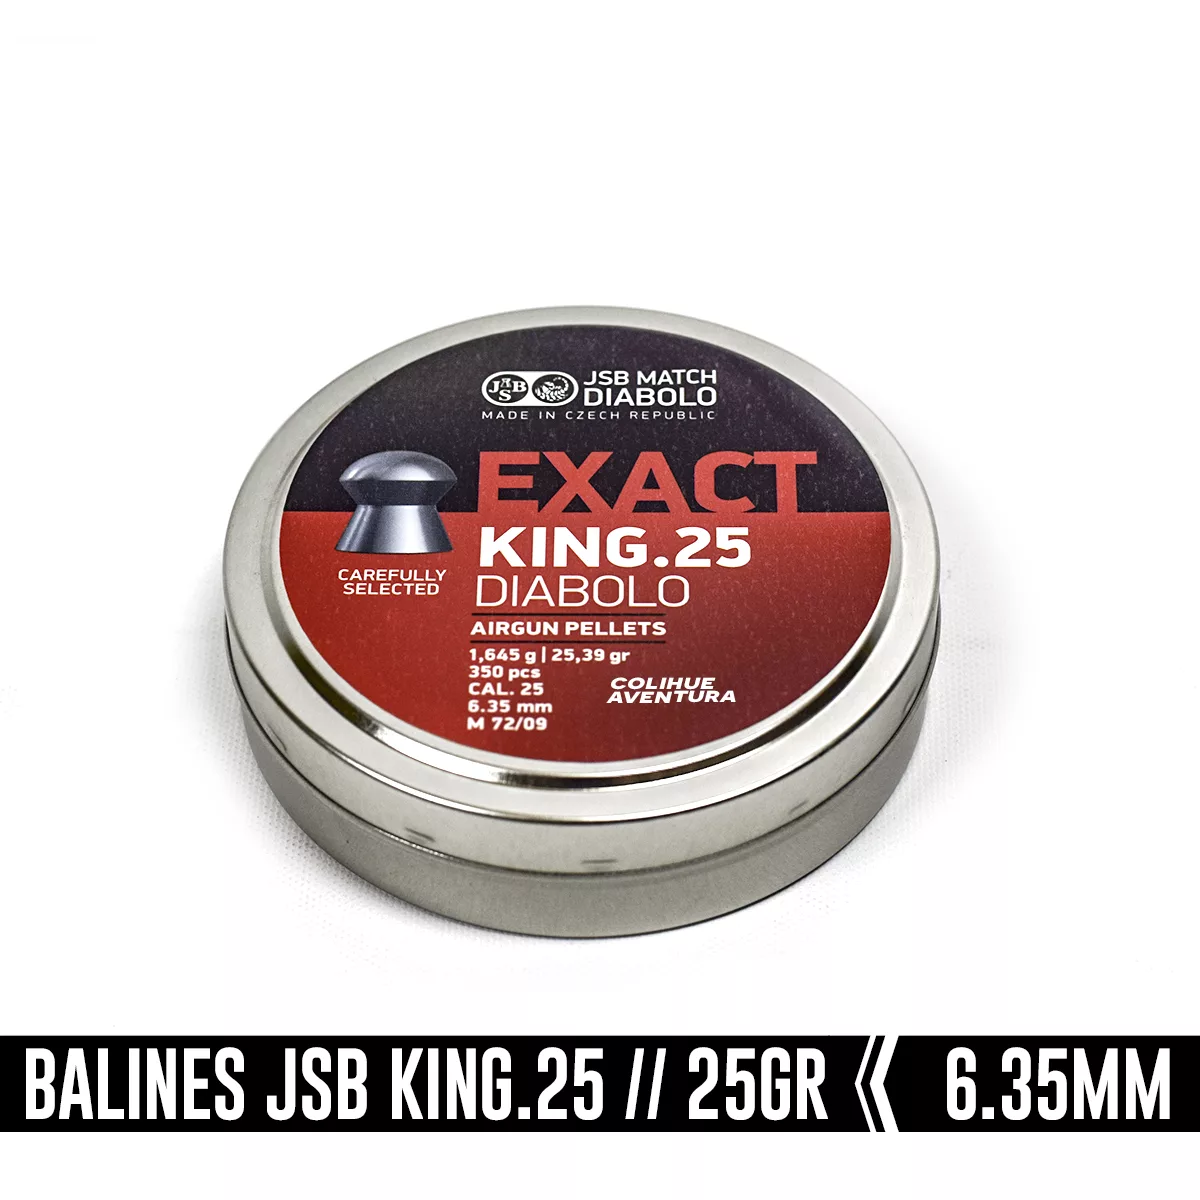 Balines JSB King.25 // 6.35mm - 25gr x150 - Colihue Aventura